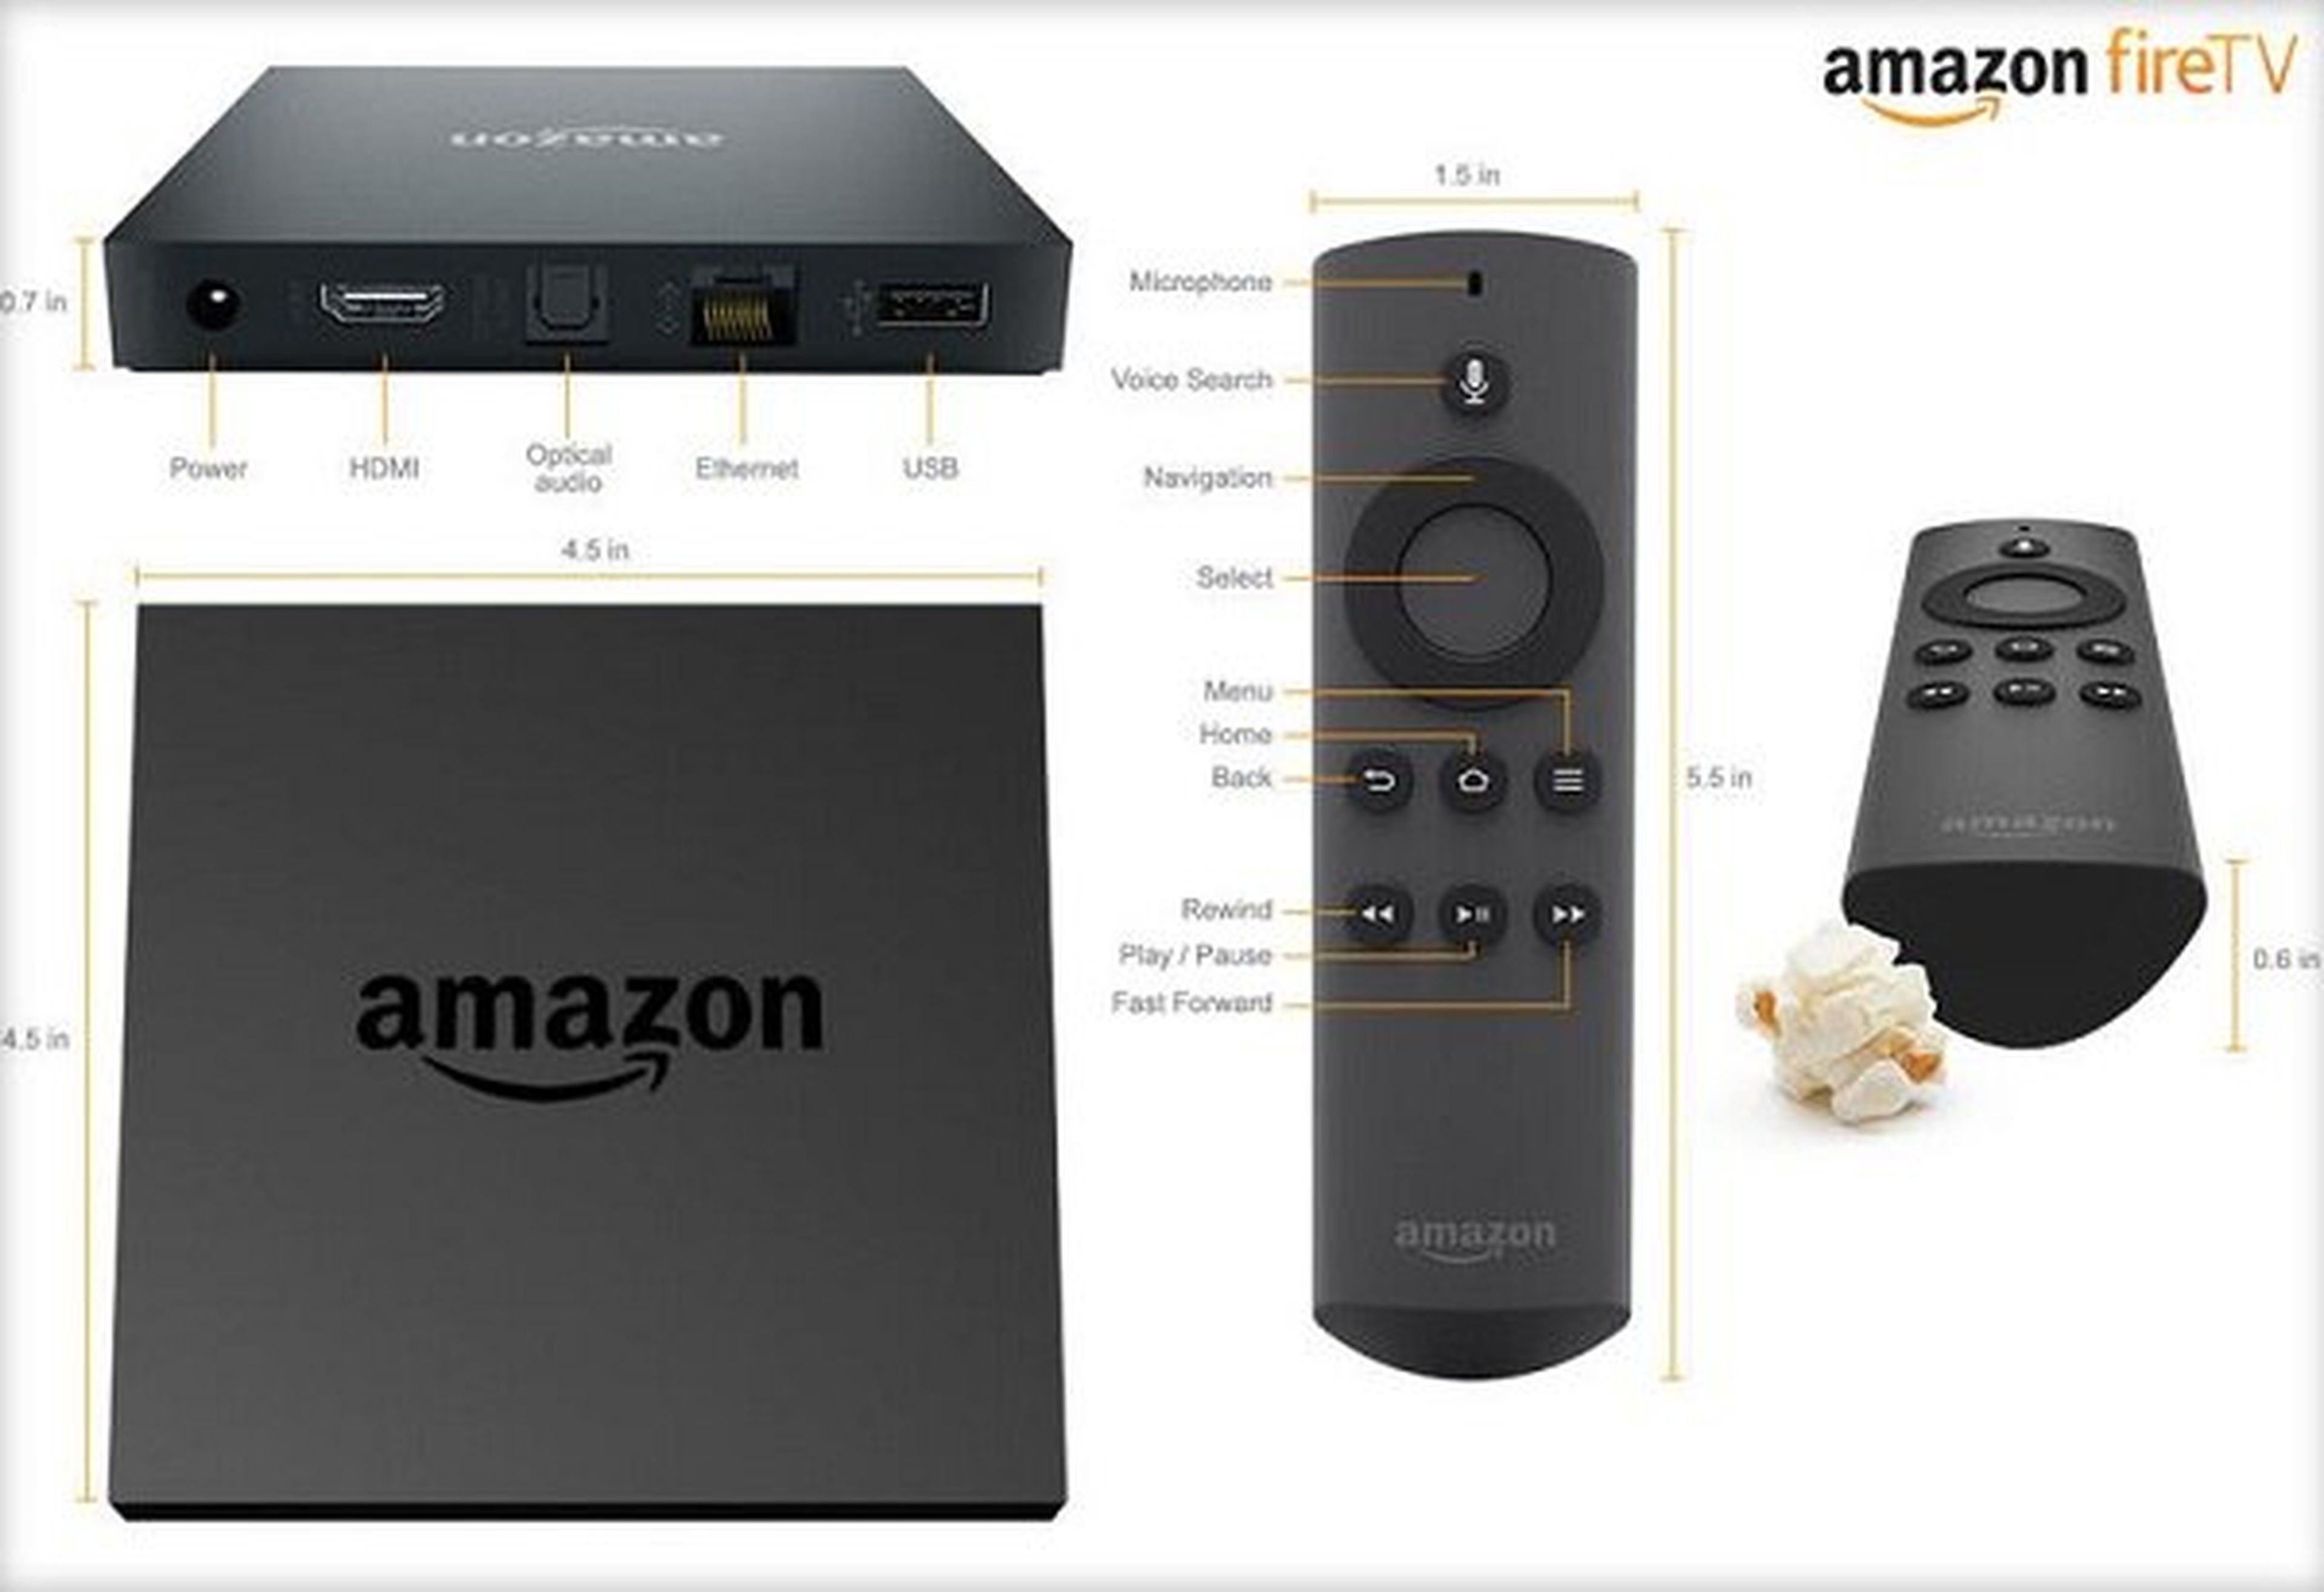 Amazon ha presentado hoy, por fin, su set-top box Fire TV